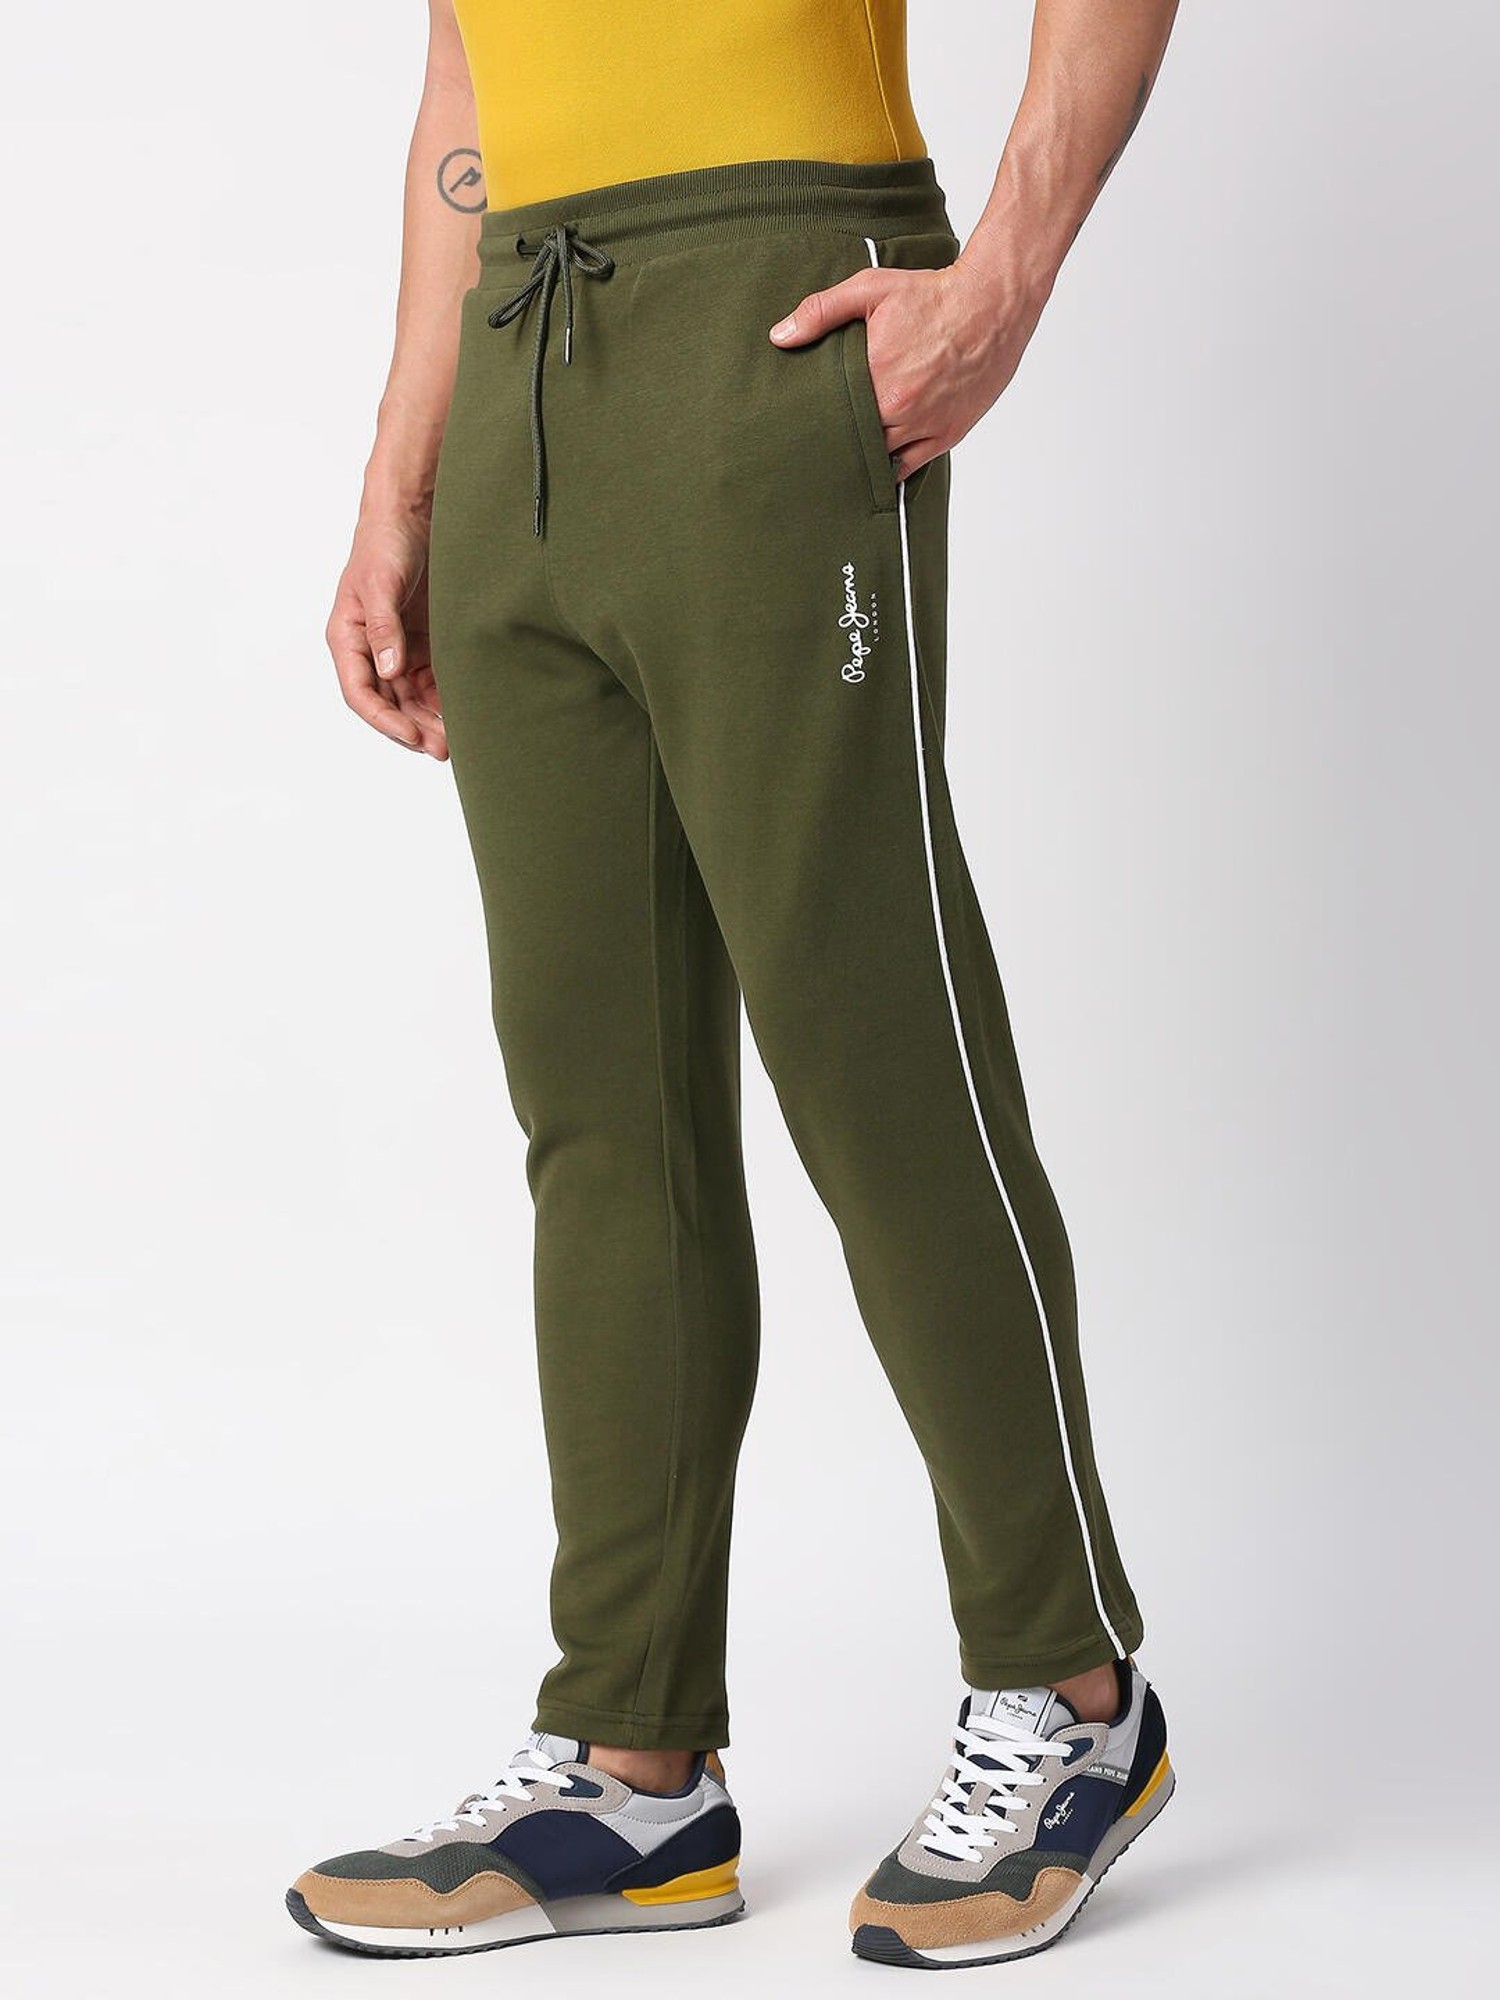 Pepe Jeans Green Slim Fit Jogger Pants